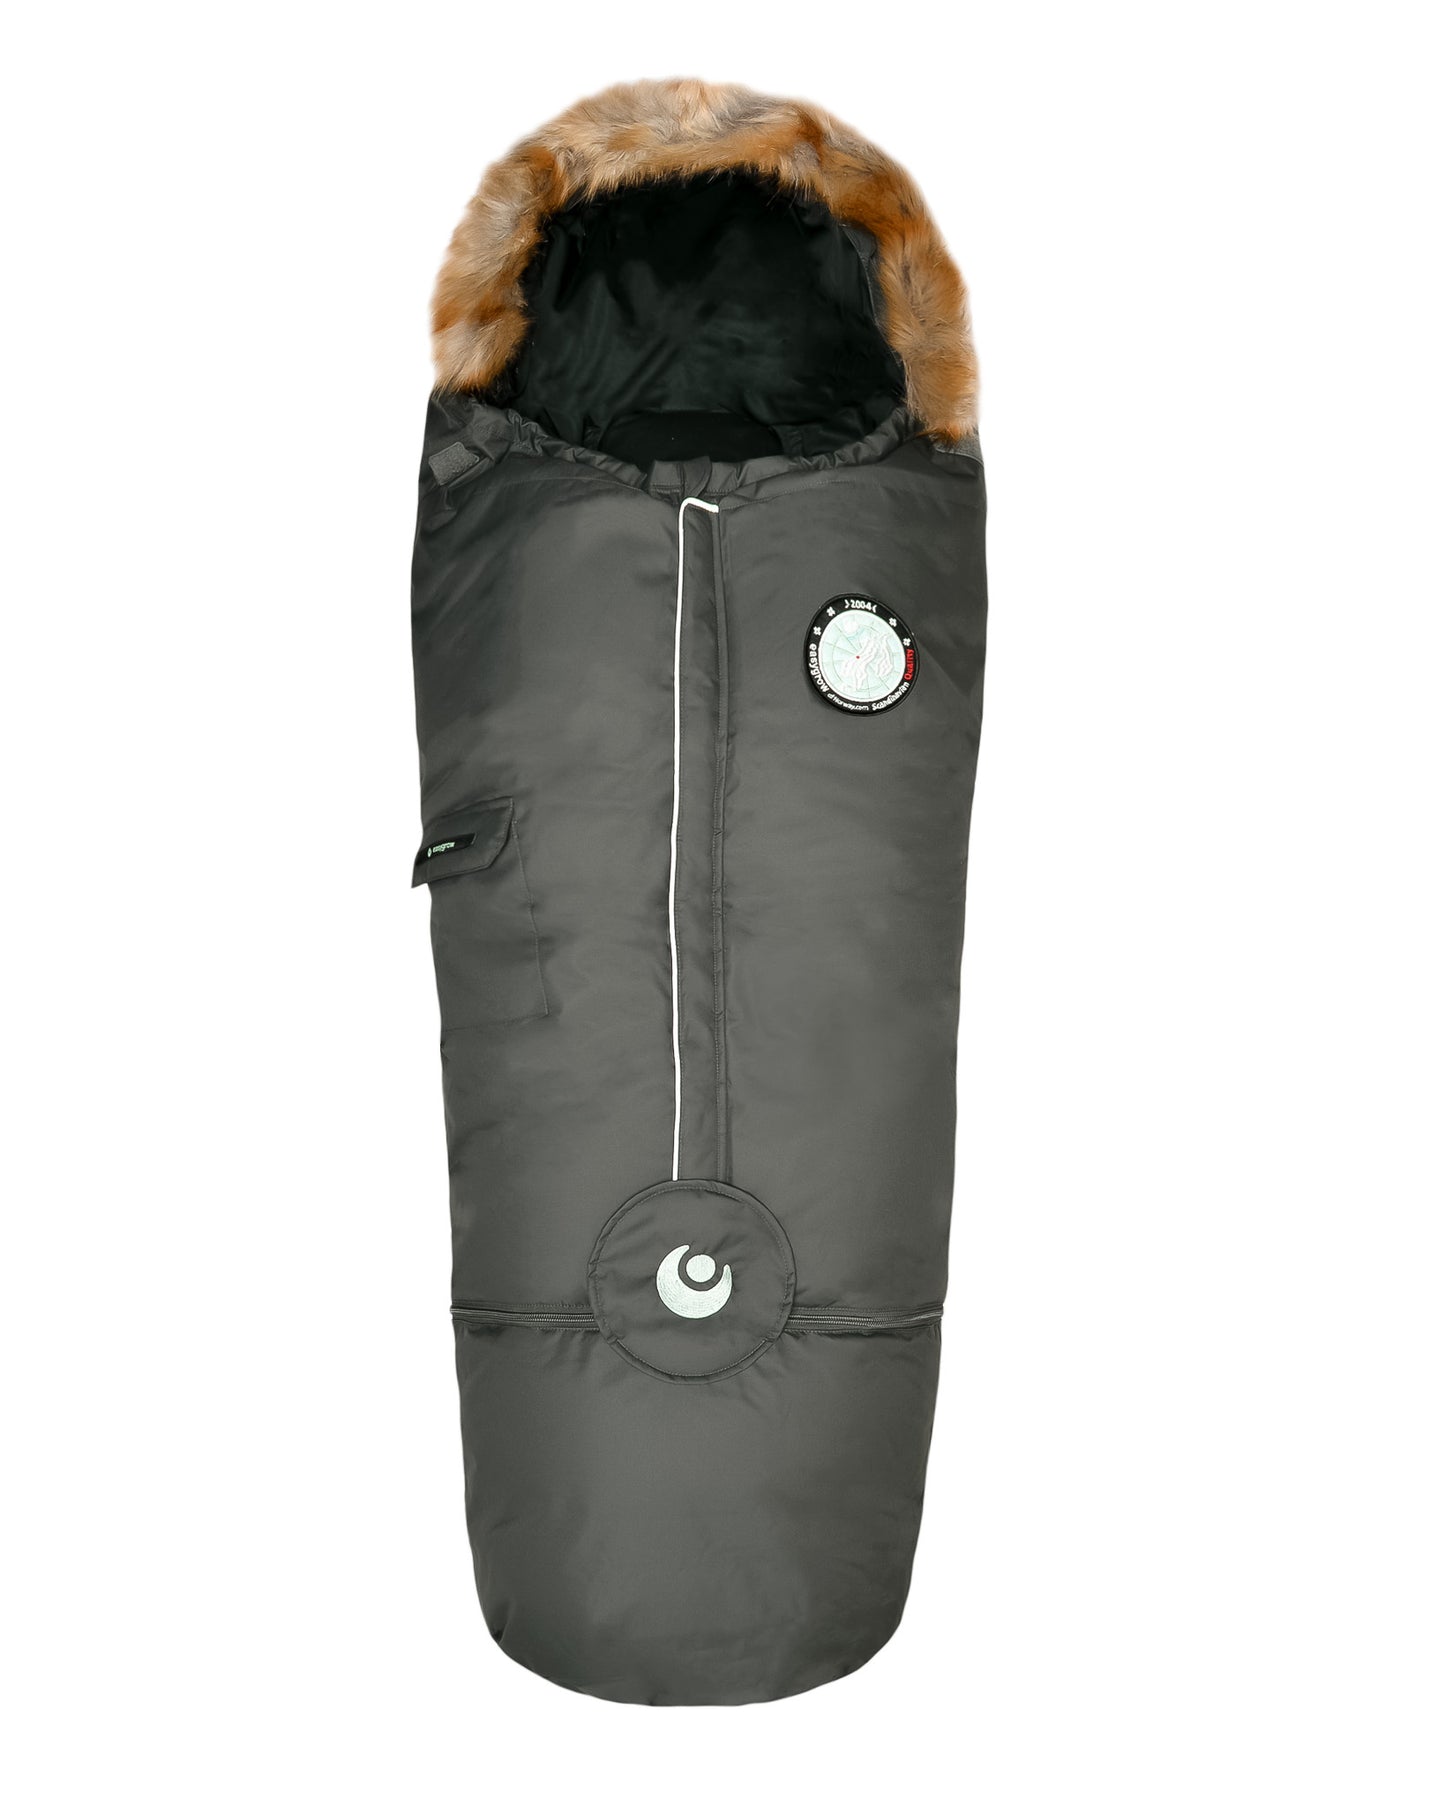 Vognpose - Easygrow "Nature 2023" || Vinterpose med åpning i ryggen